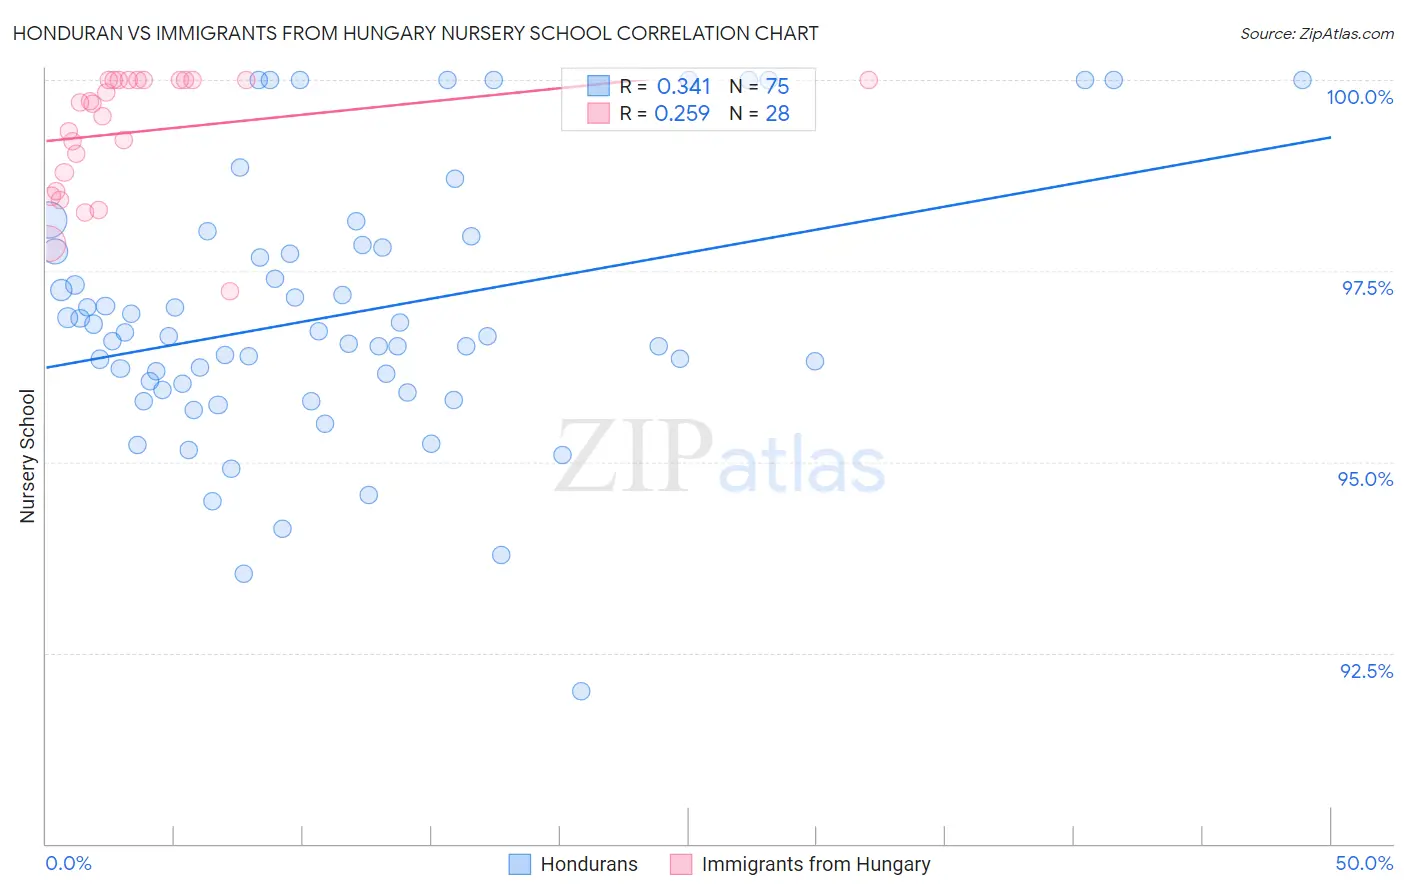 Honduran vs Immigrants from Hungary Nursery School